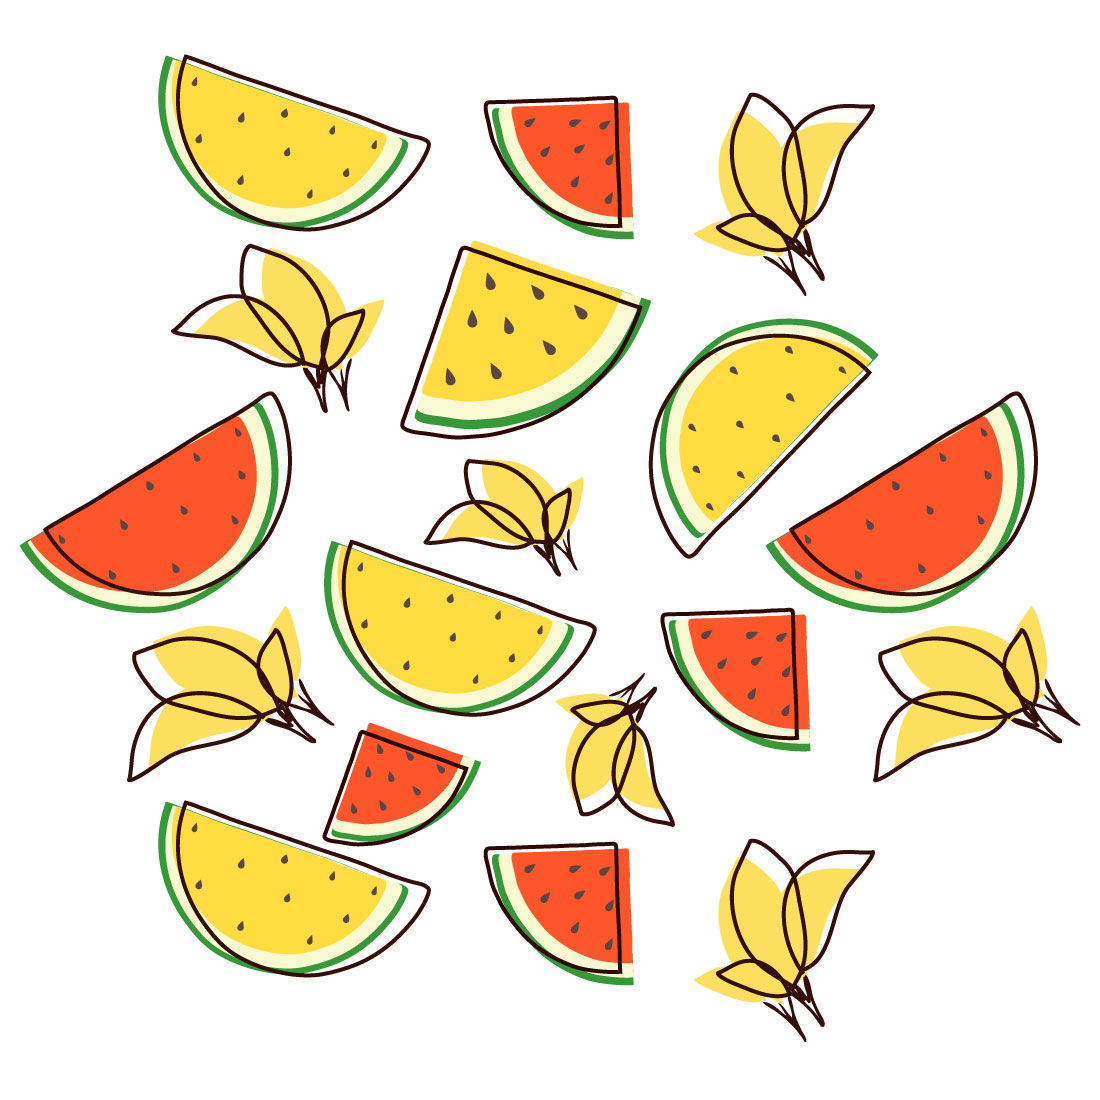 Watermelon Seamless Pattern preview image.